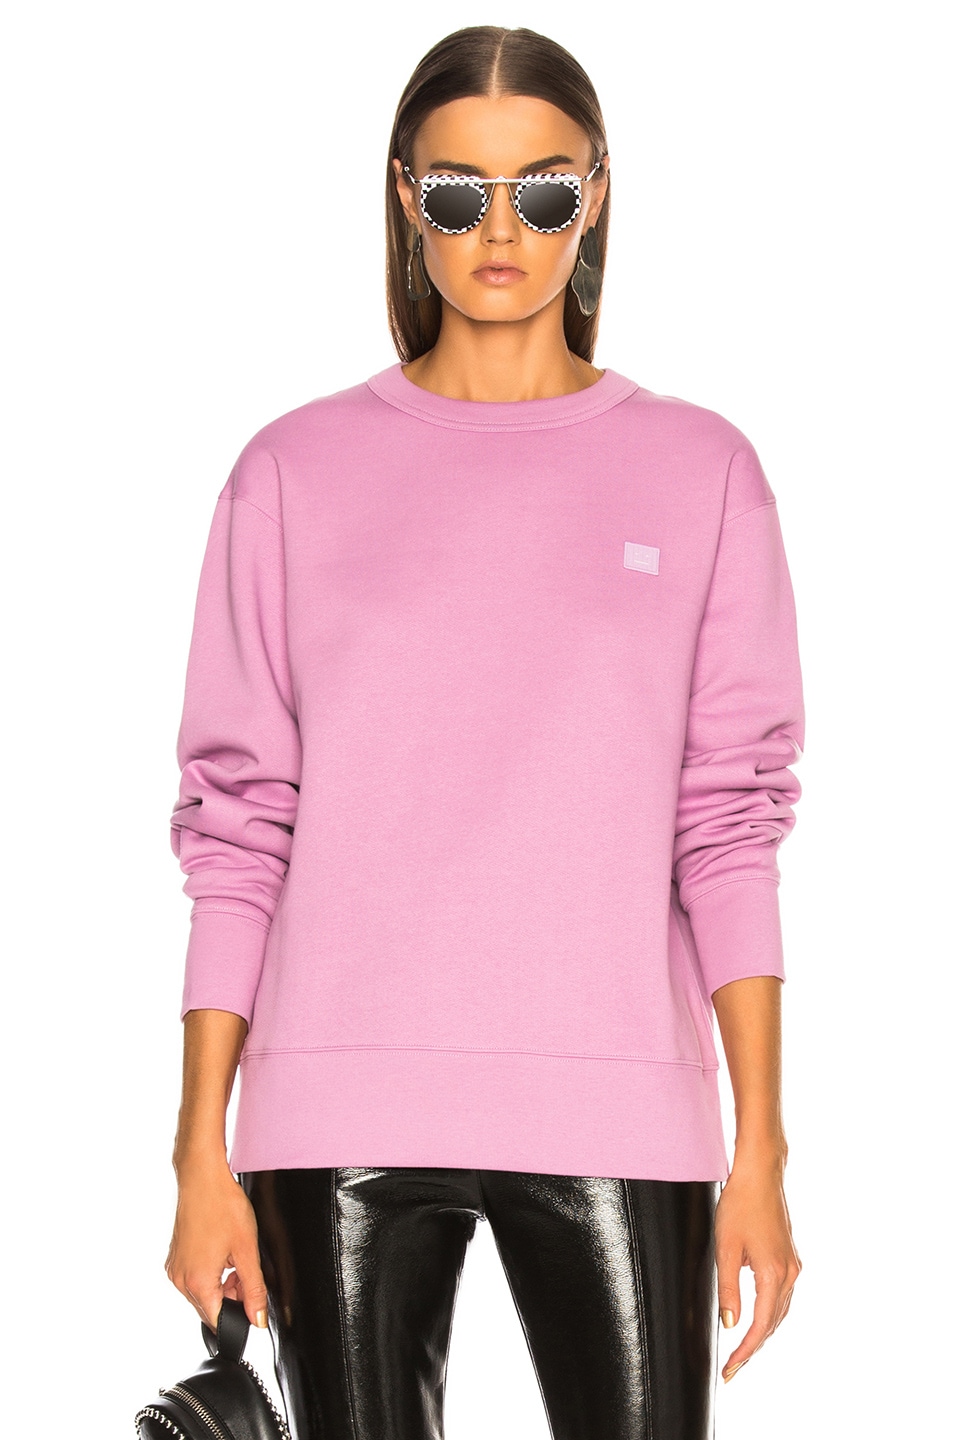 Acne Studios Fairview Face Sweater in Lilac Purple | FWRD